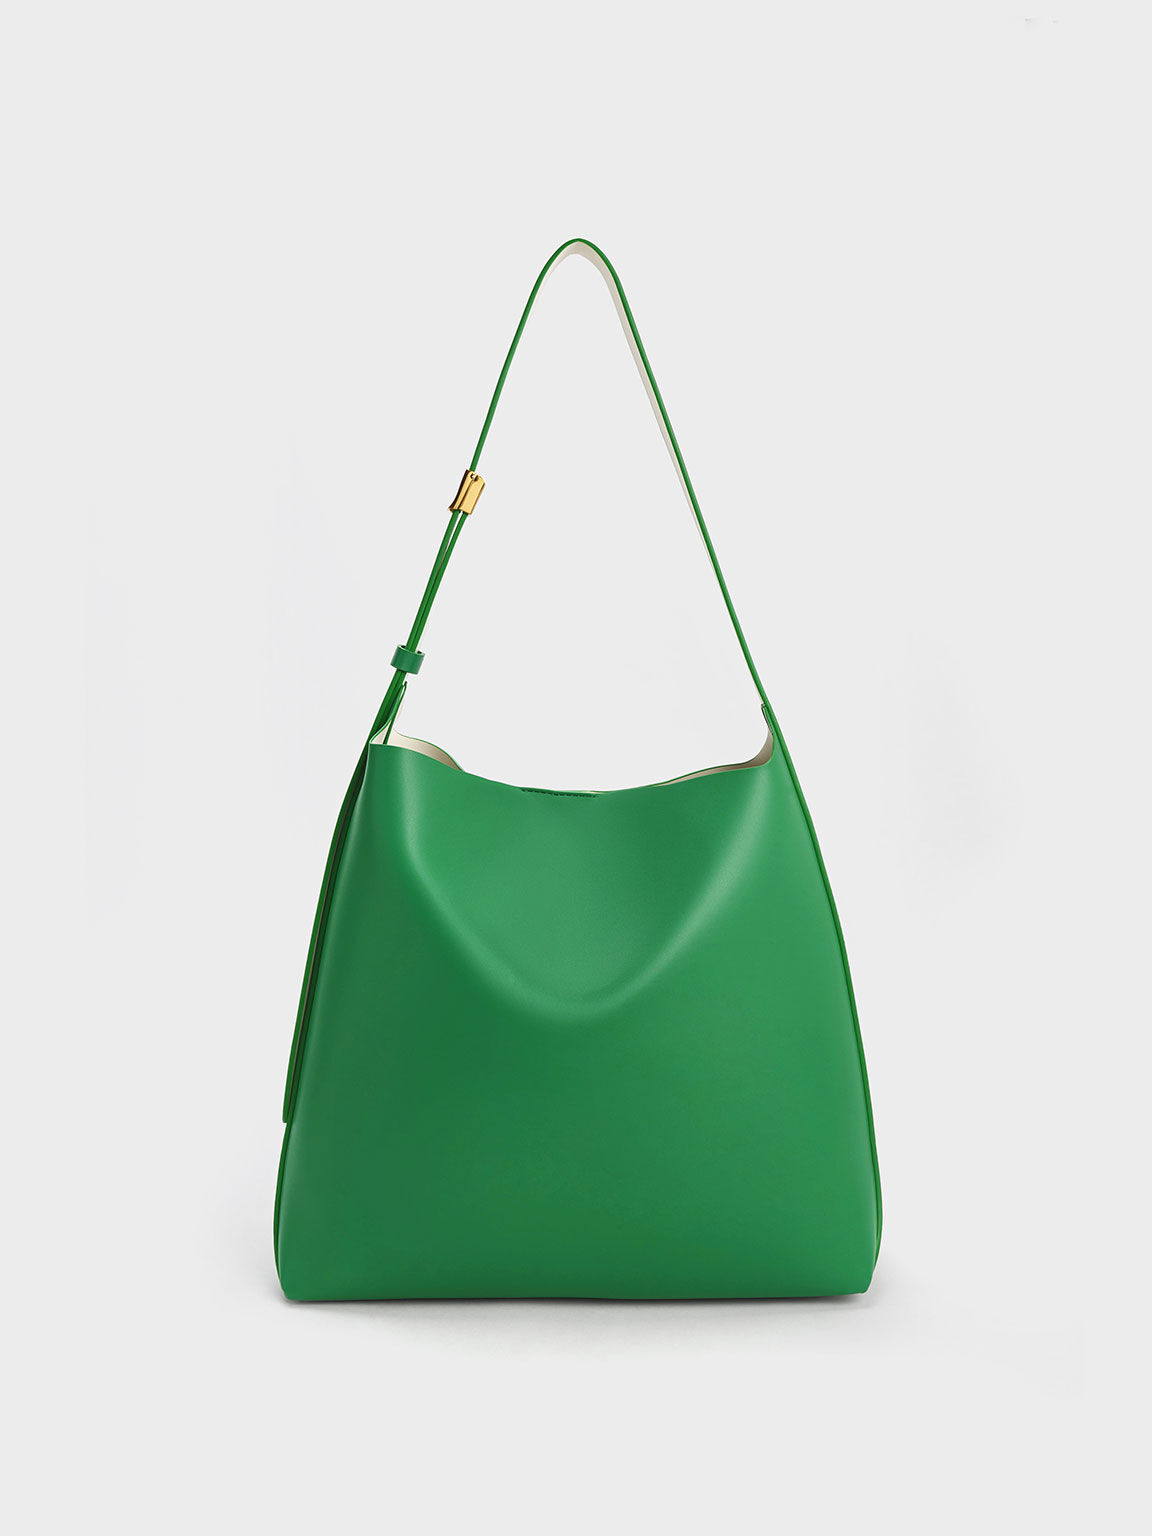 Kynthei, Green Tote Bag